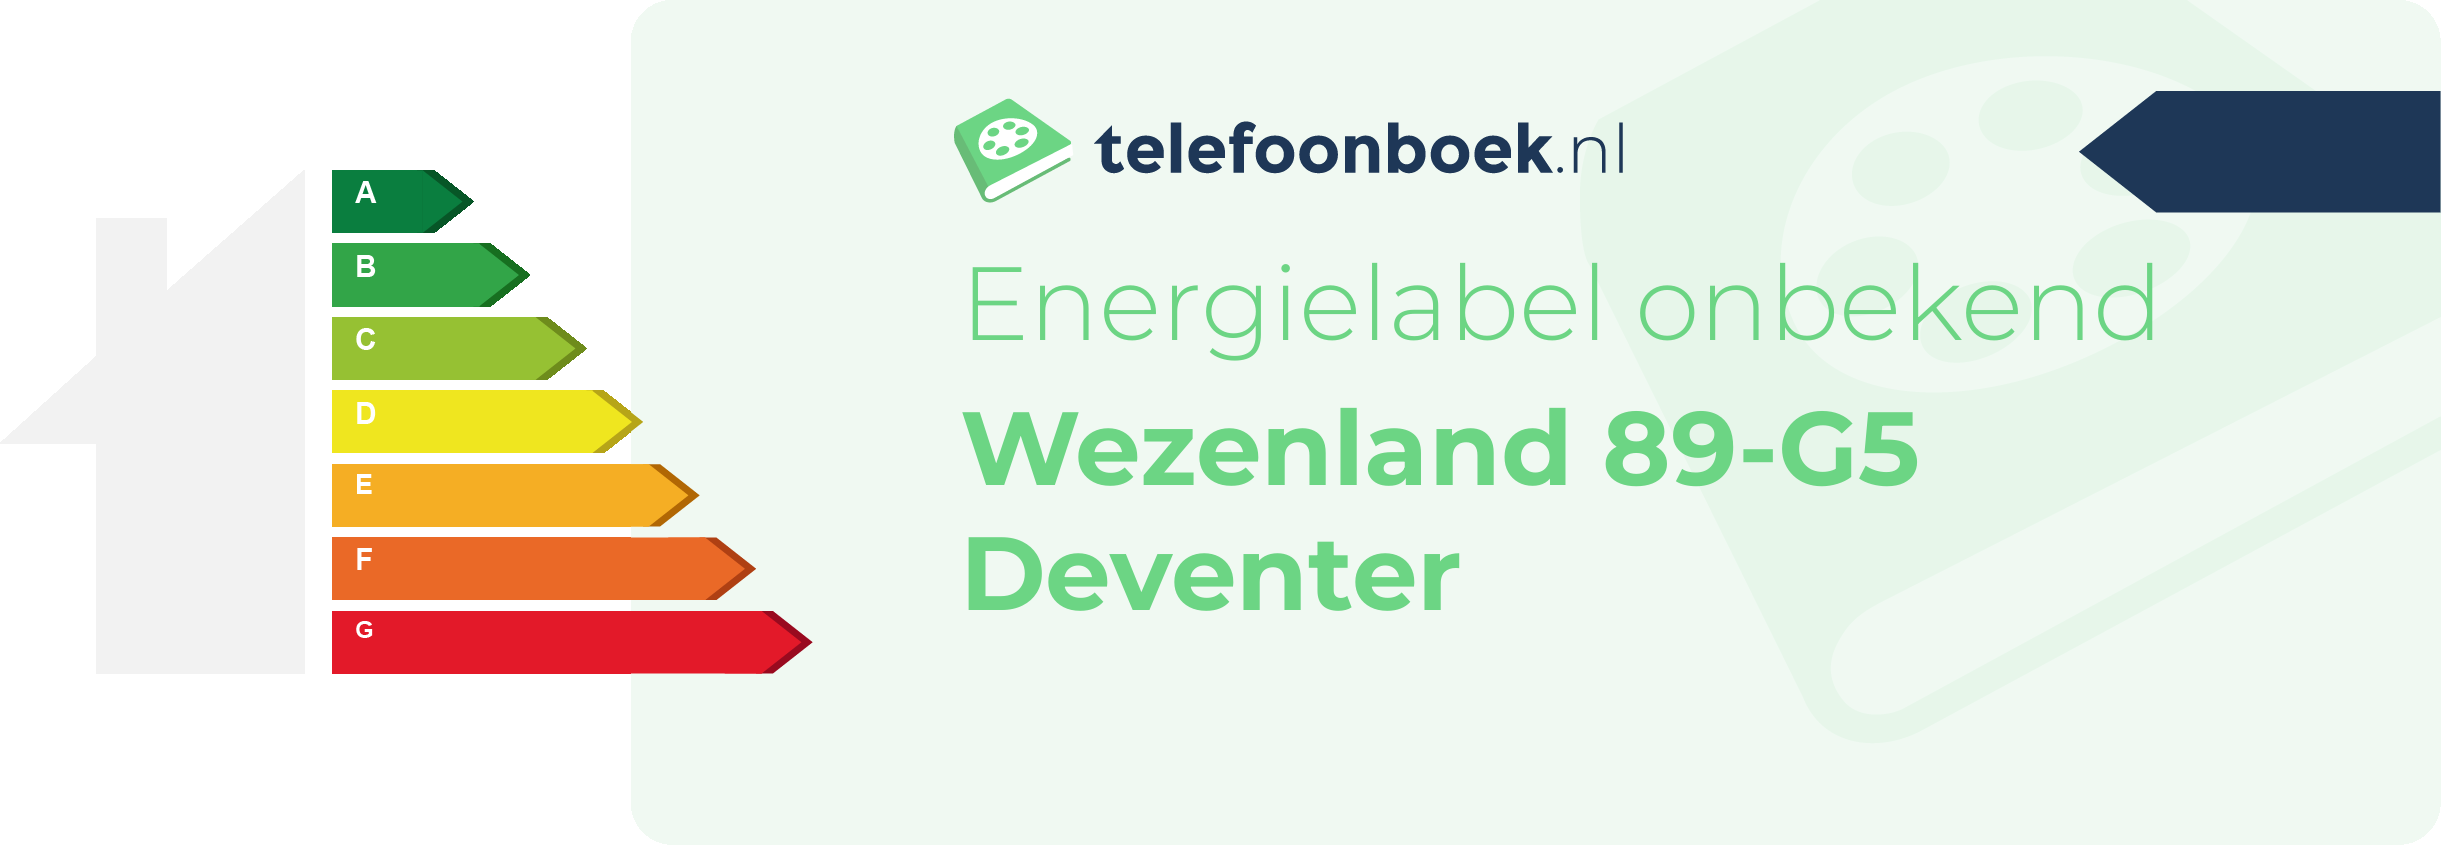 Energielabel Wezenland 89-G5 Deventer